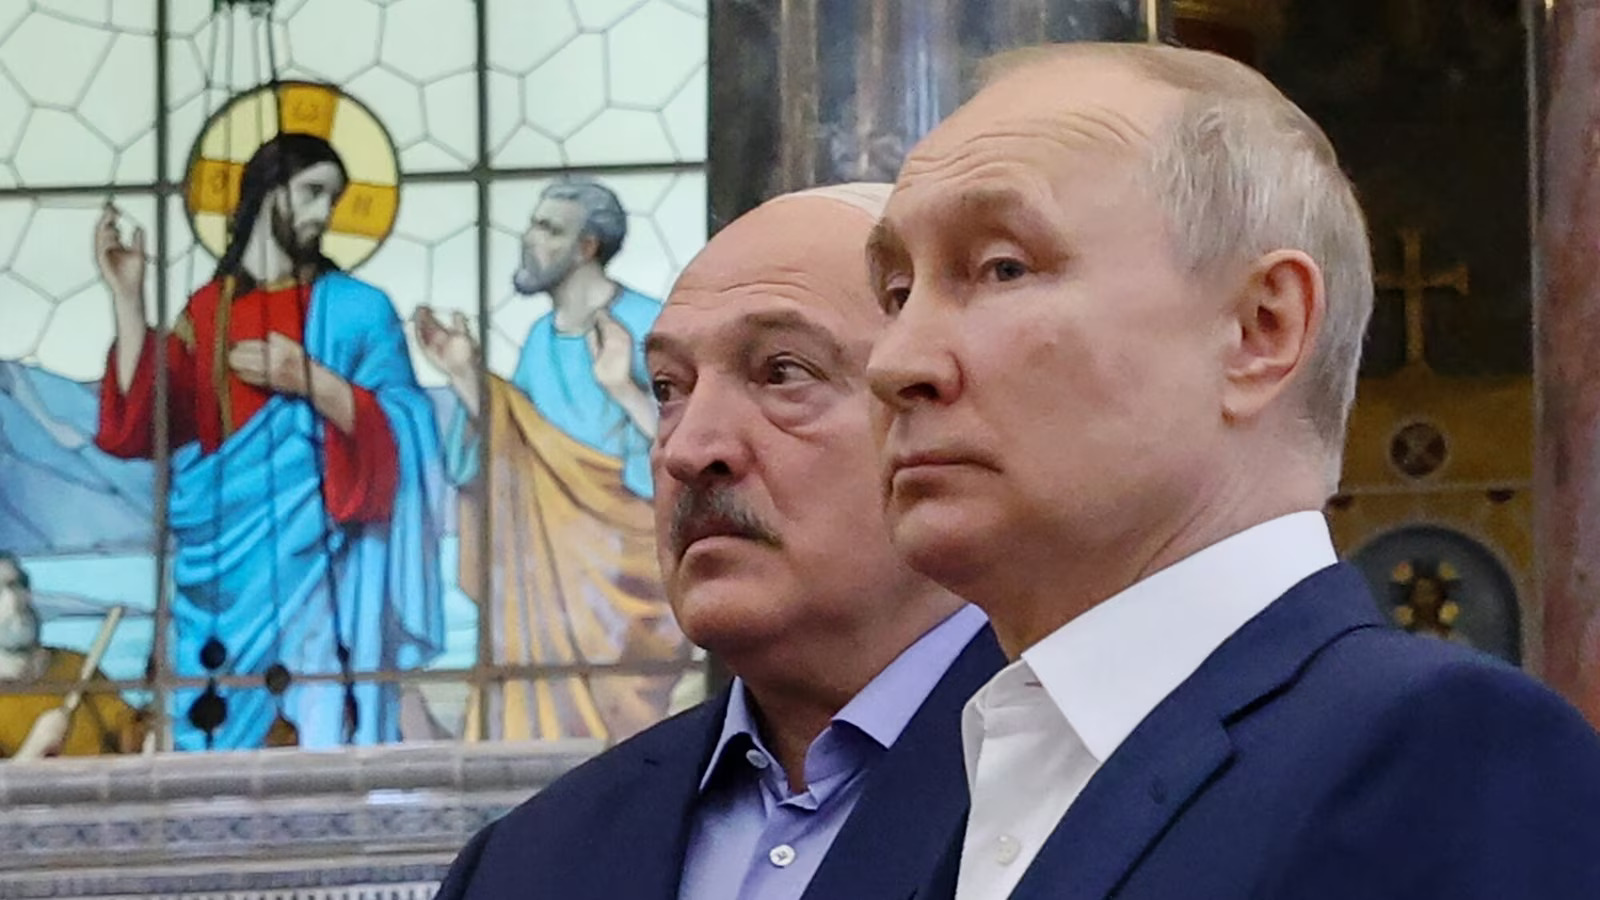 Russia's President Vladimir Putin and Belarus' President Alexander Lukashenko